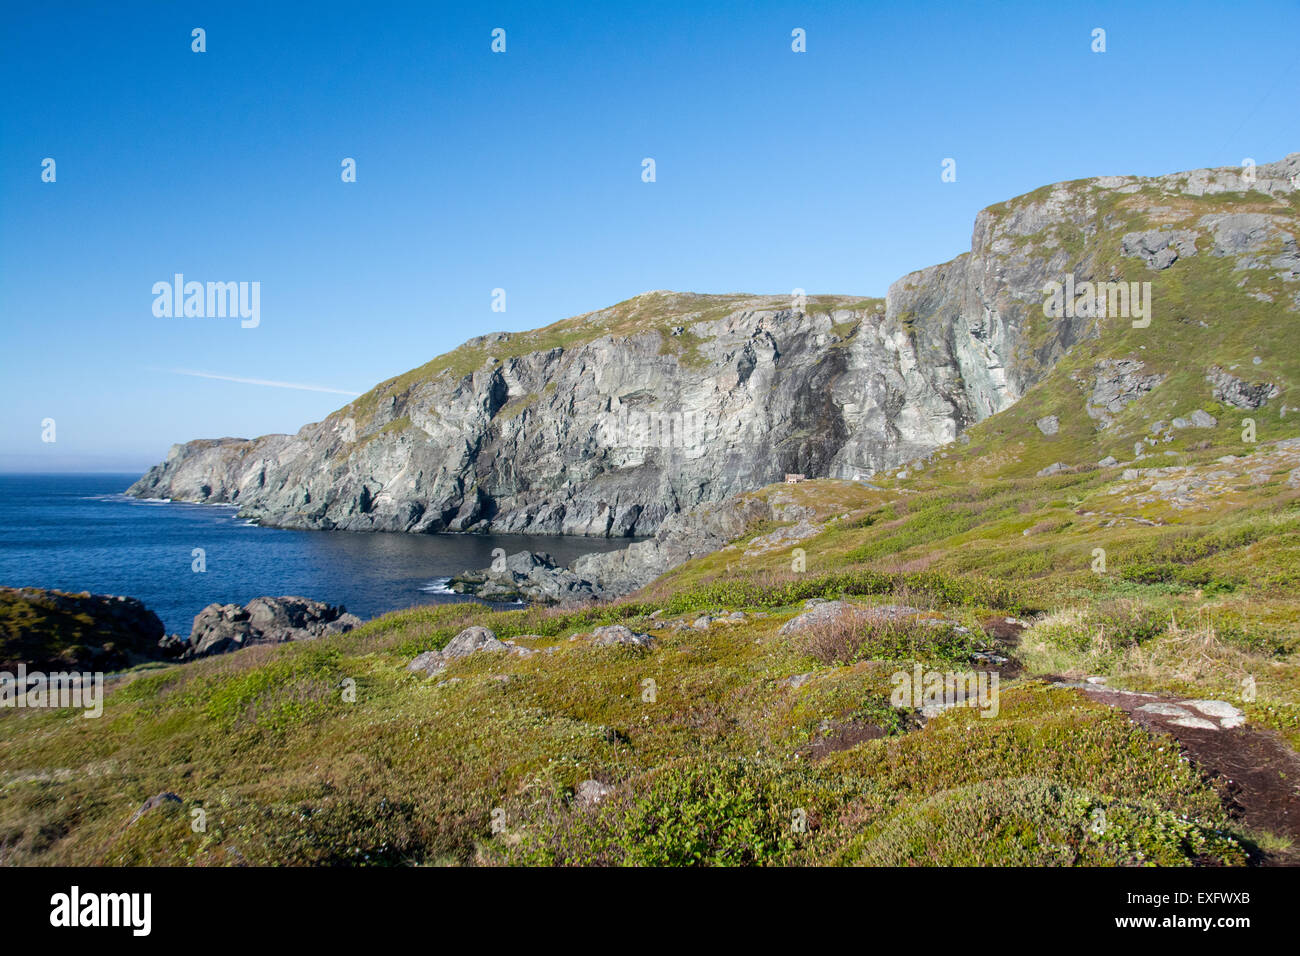 Sea cliffs near St. Anthony, Newfoundland. Stock Photo